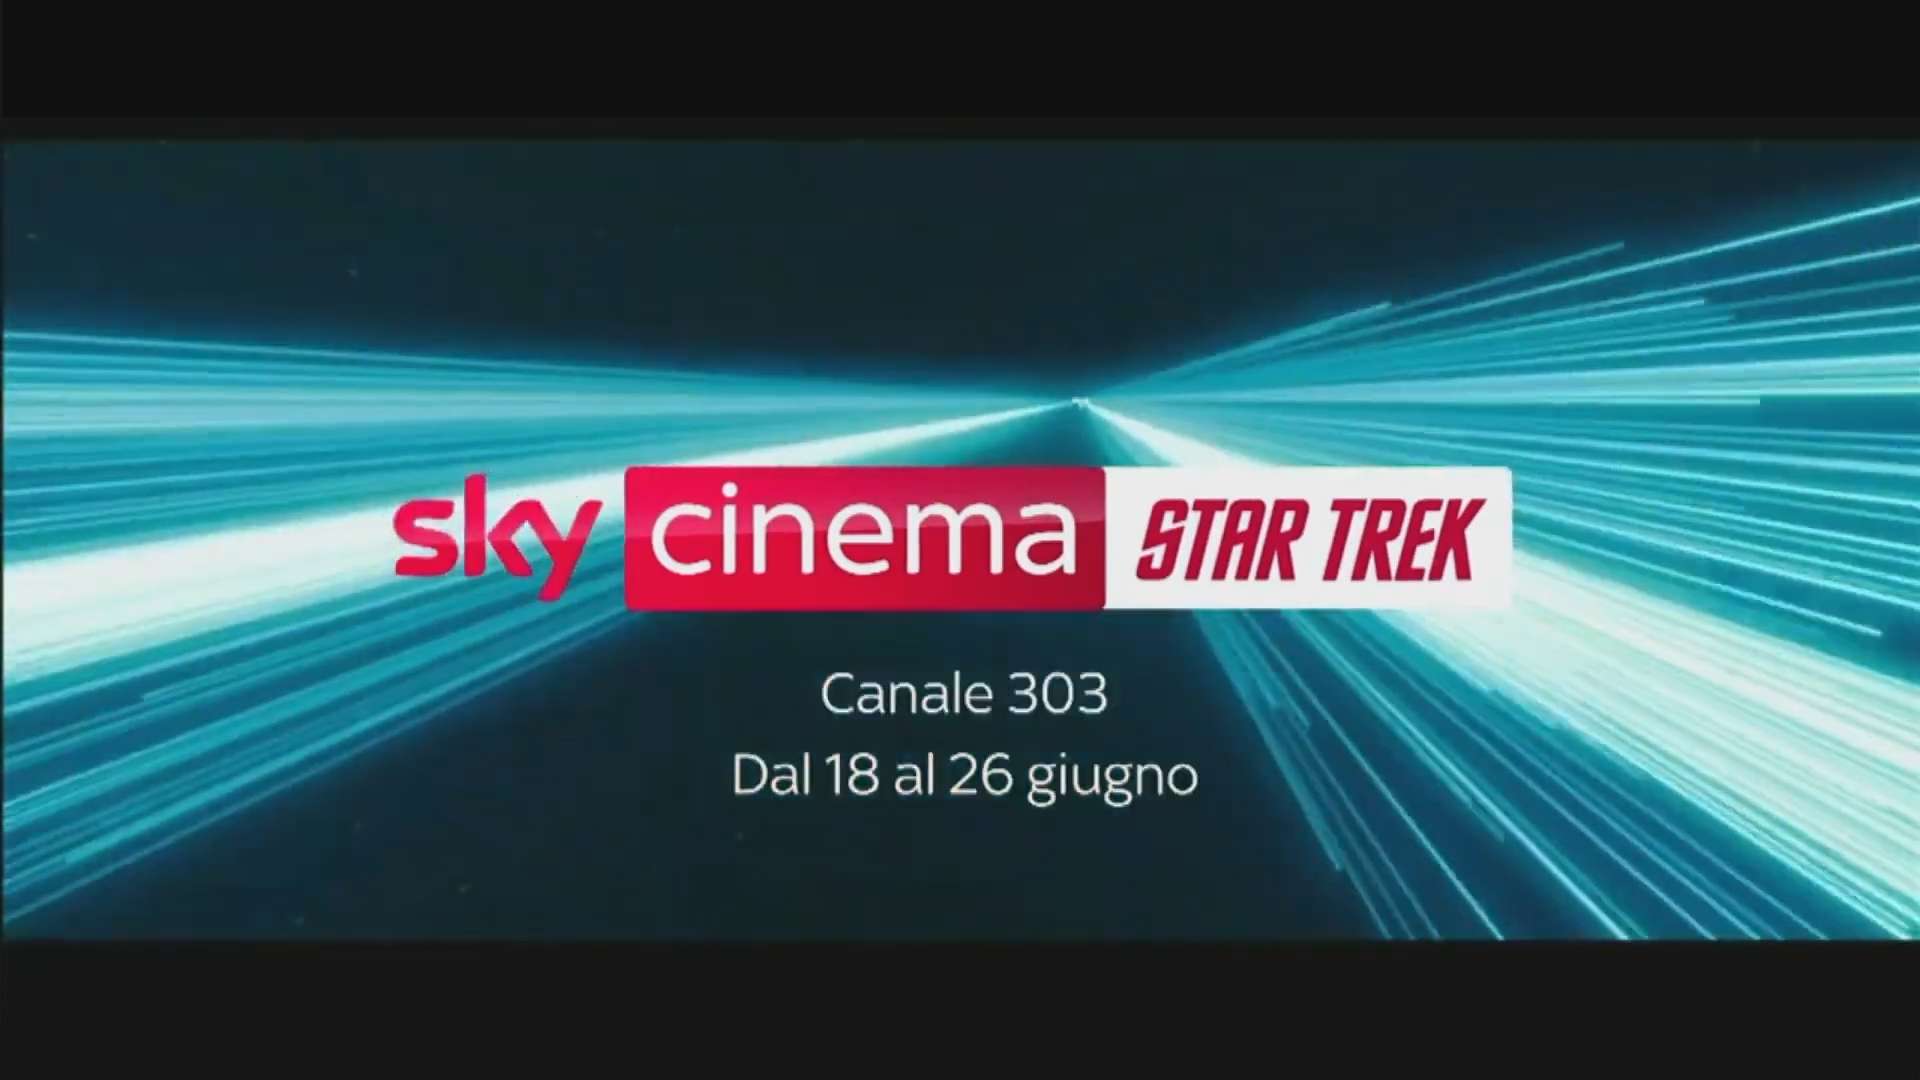 Sky Cinema Star Trek, un canale interamente dedicato alla saga cinematografica 